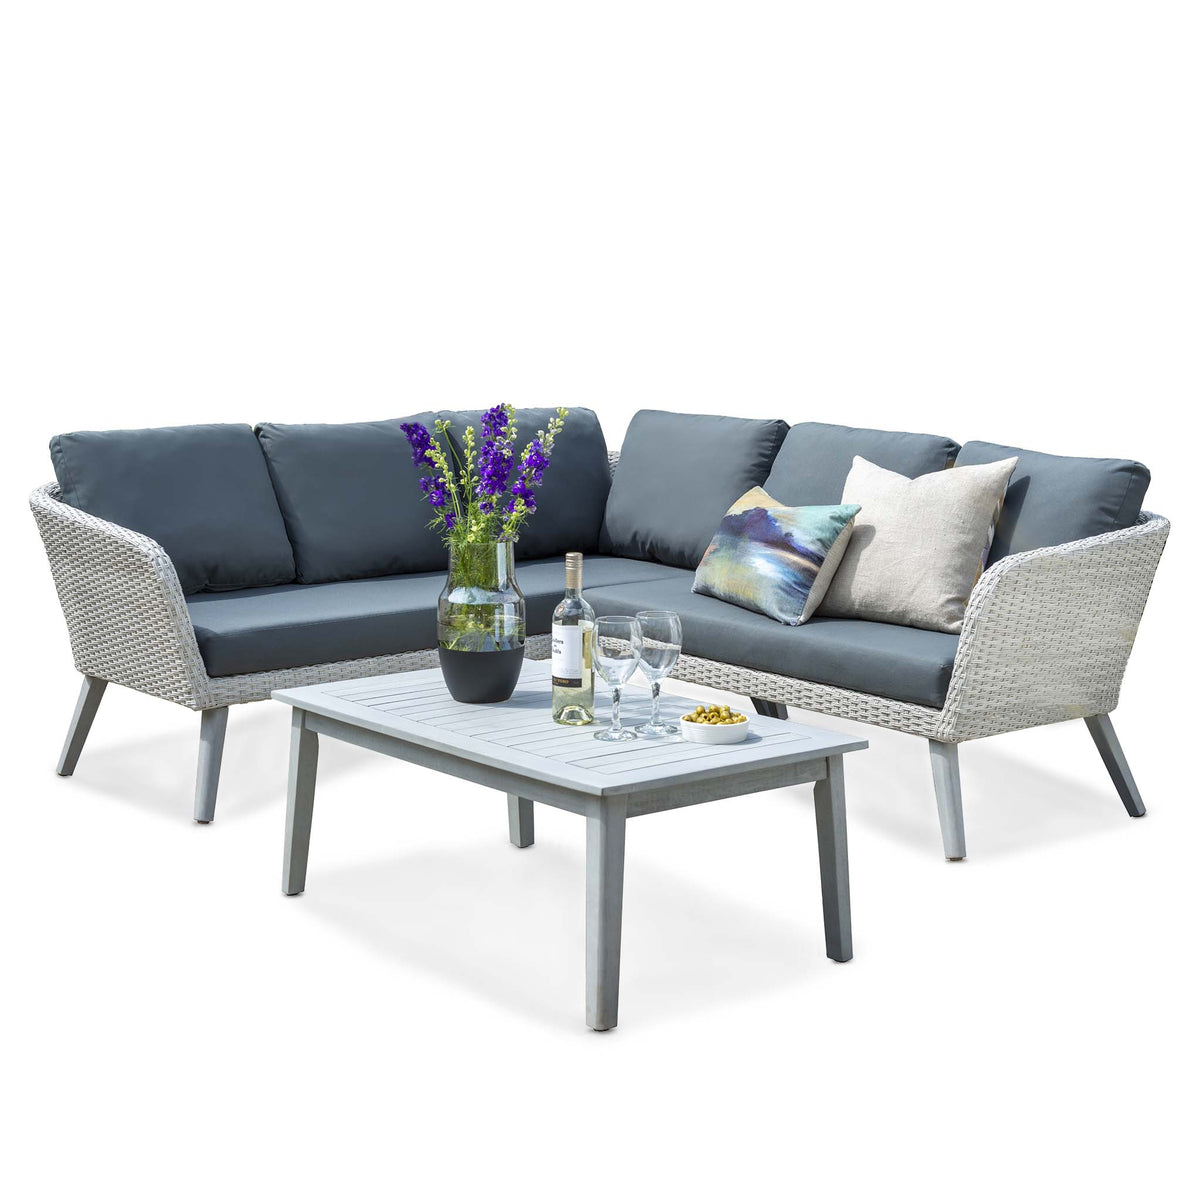 Chatsworth Rattan Corner Lounge Set by Roseland Furniture